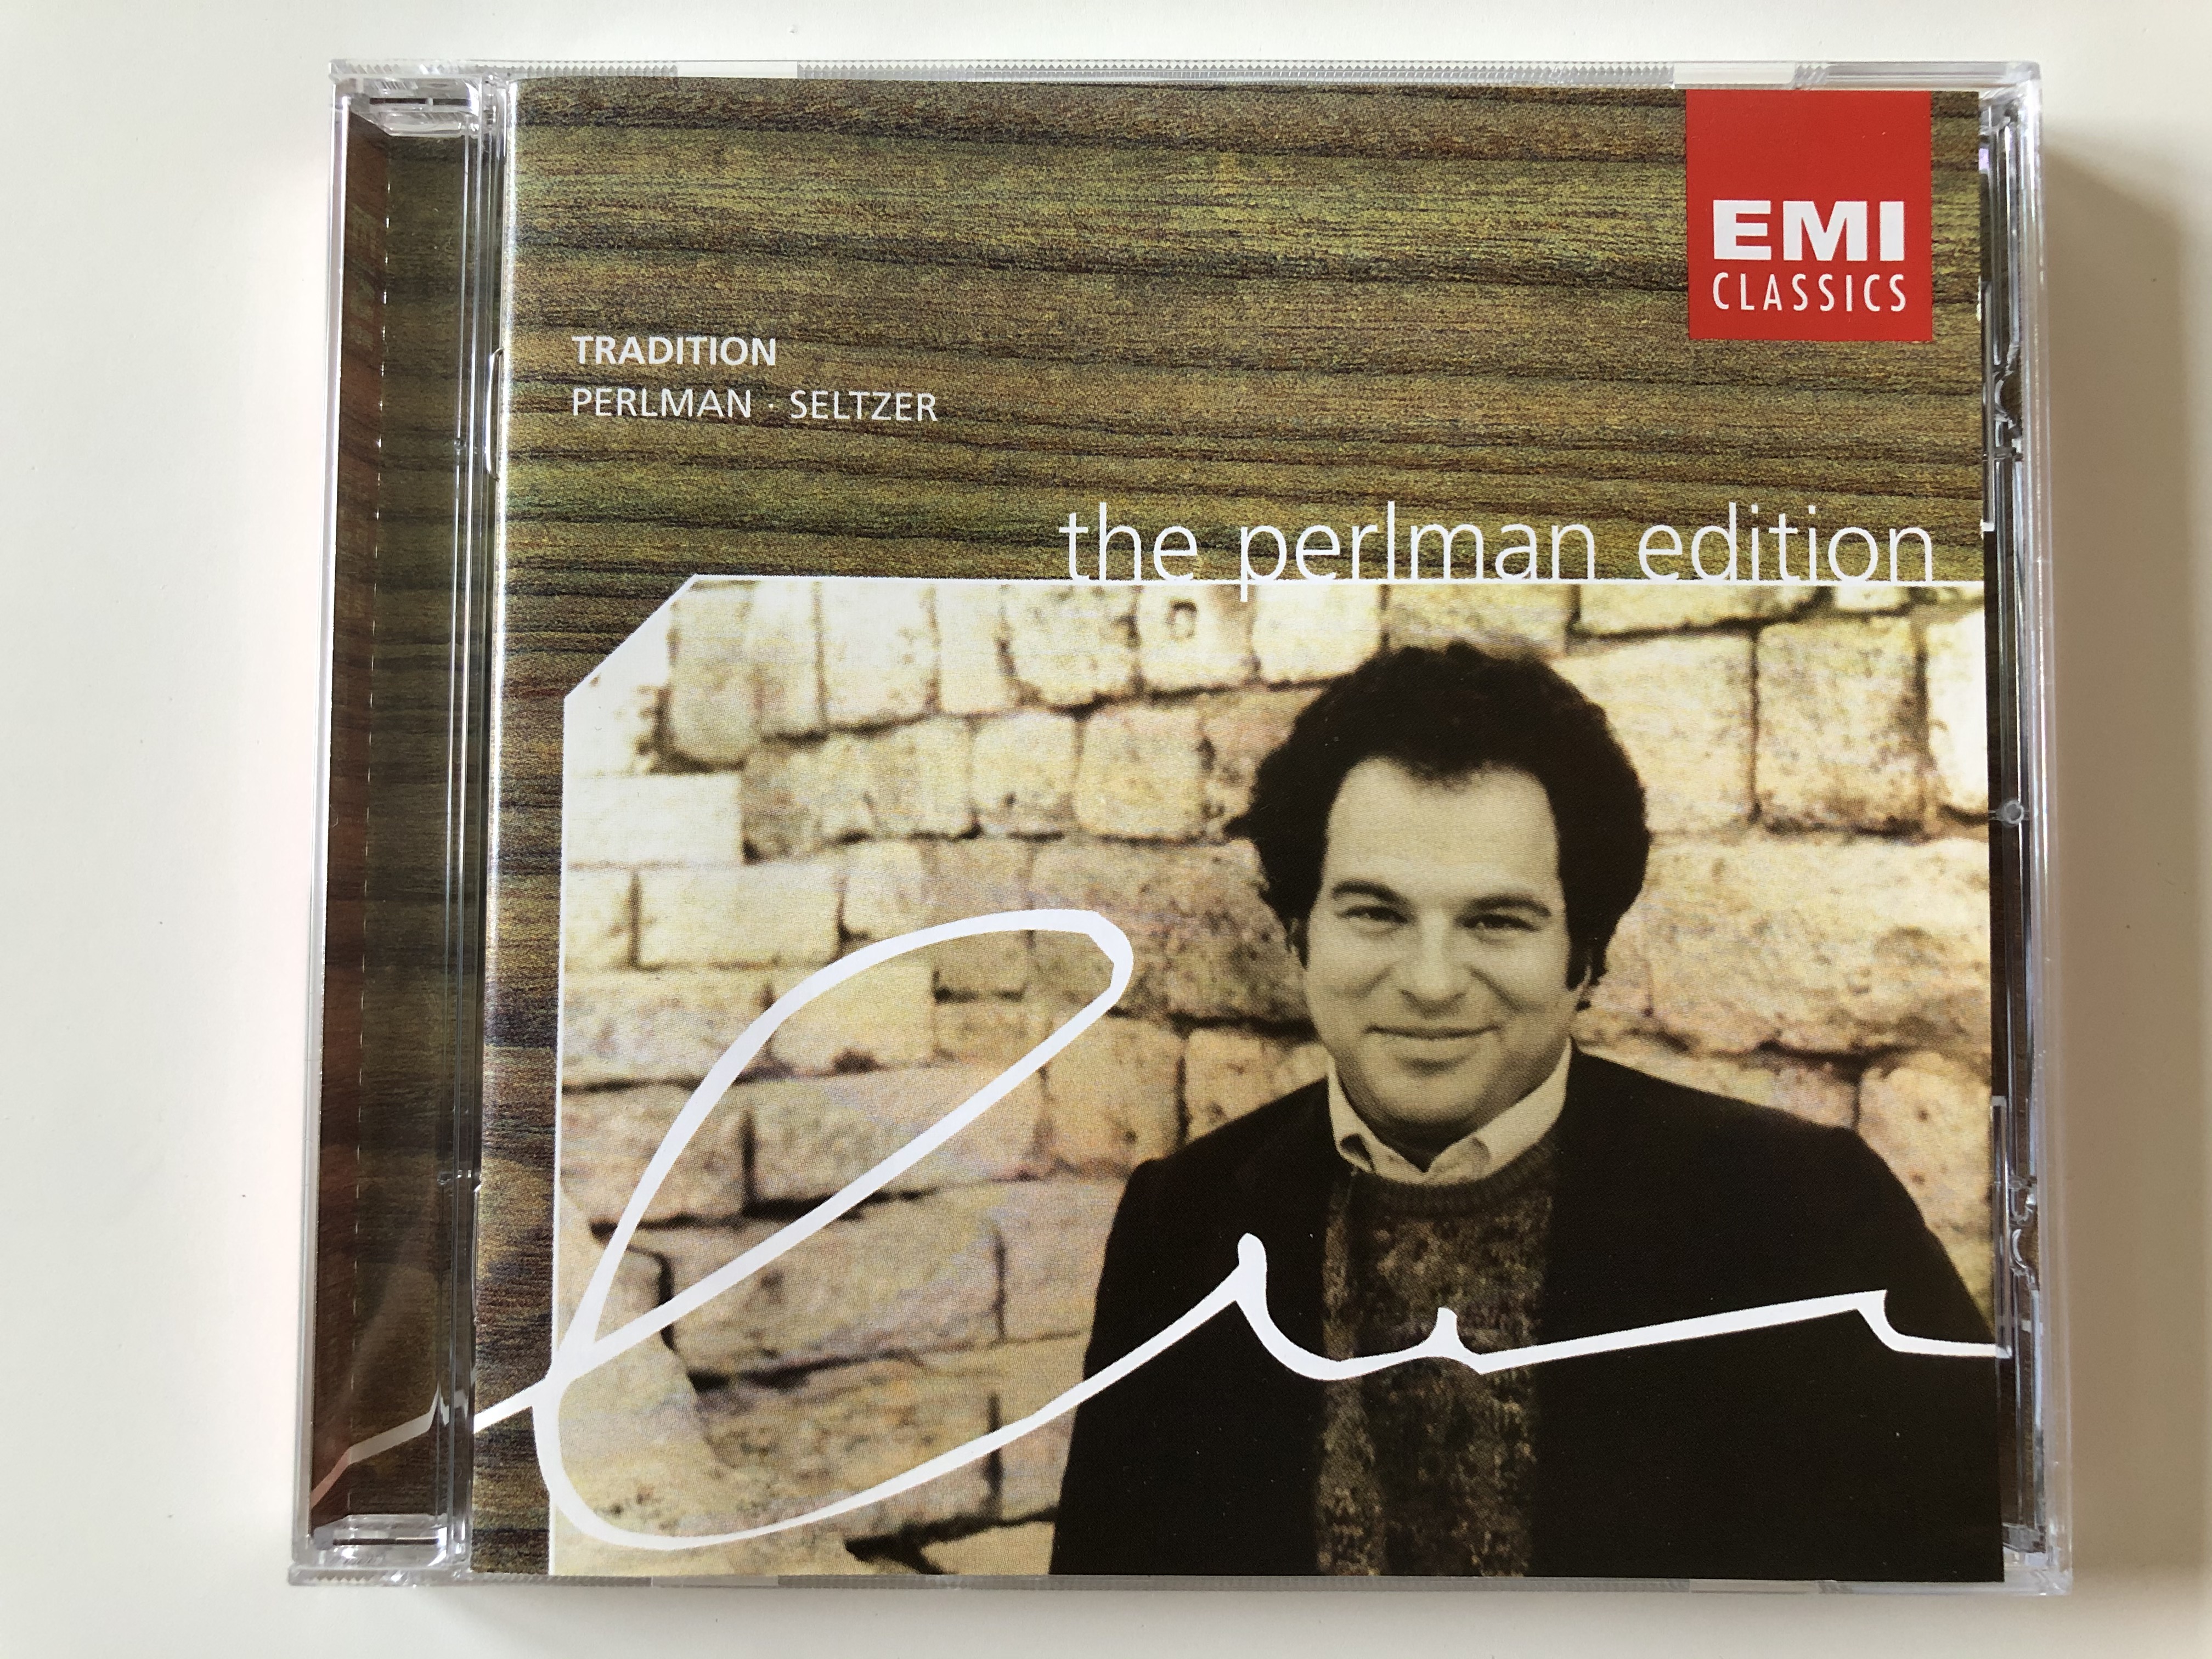 tradition-perlman-seltzer-the-perlman-edition-emi-classics-audio-cd-2003-stereo-5-62597-2-1-.jpg